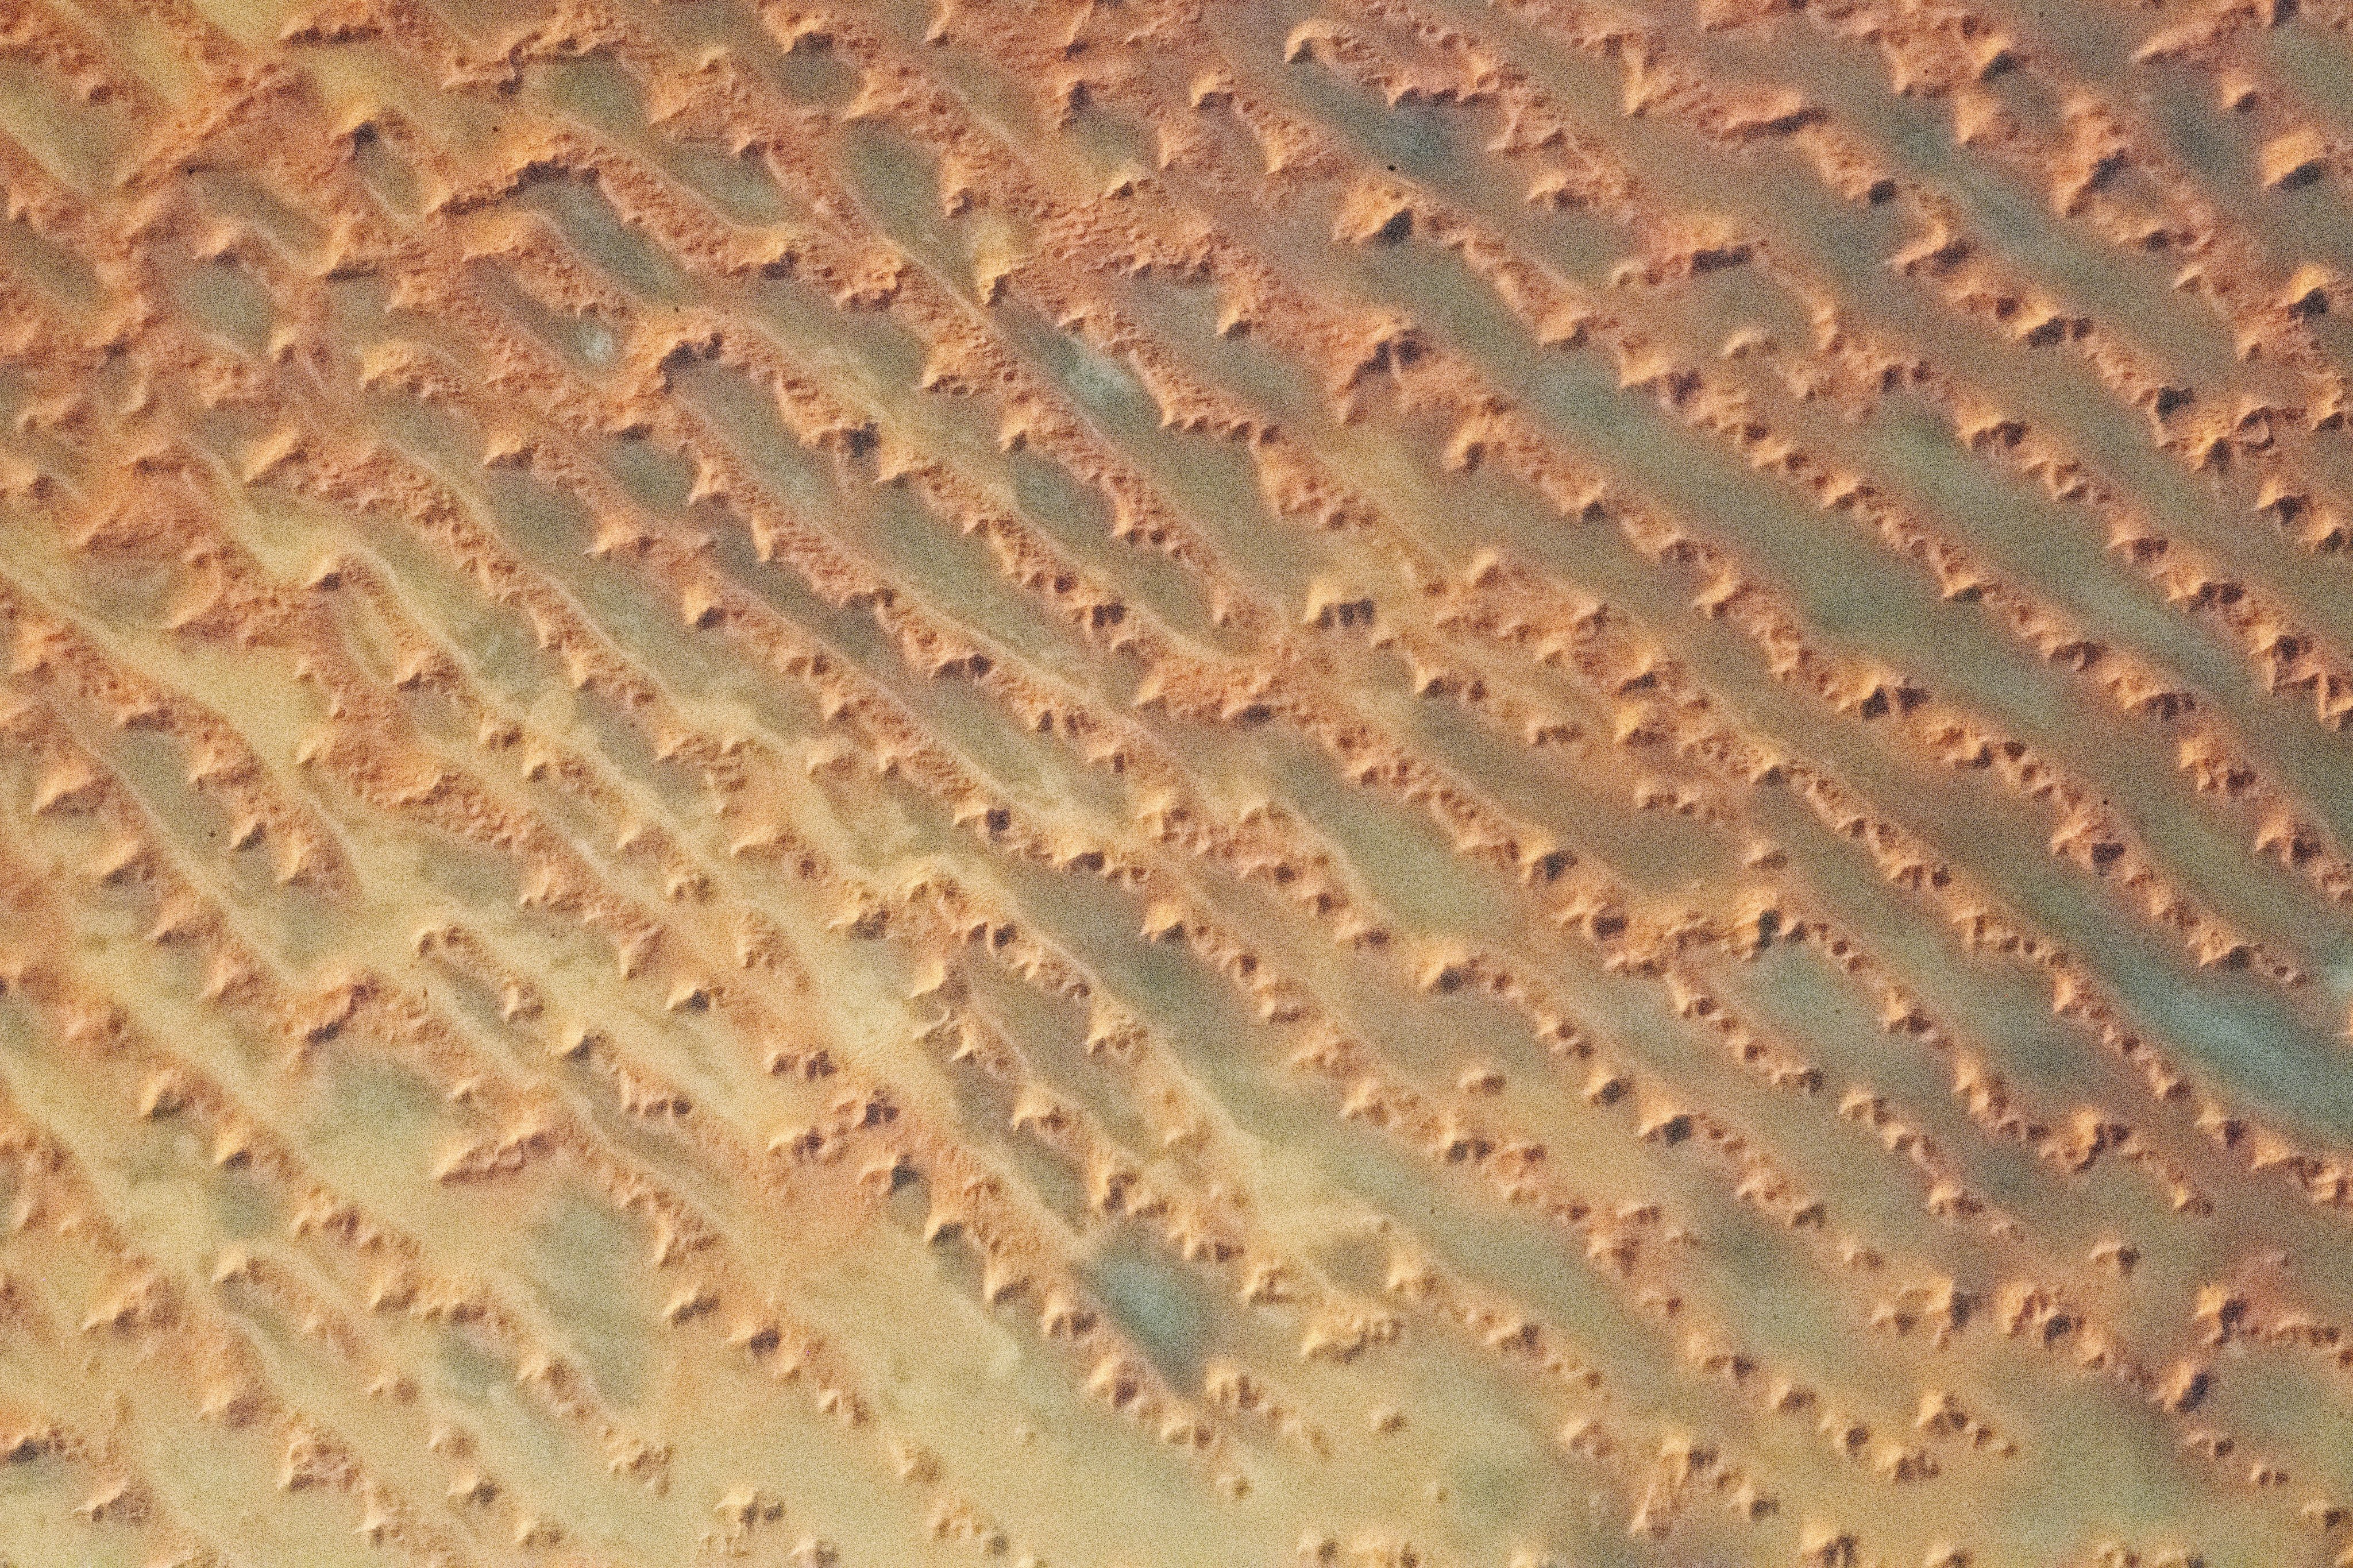 A complex system of dunes in Saudi Arabia's Rub’ al Khali sand sea.